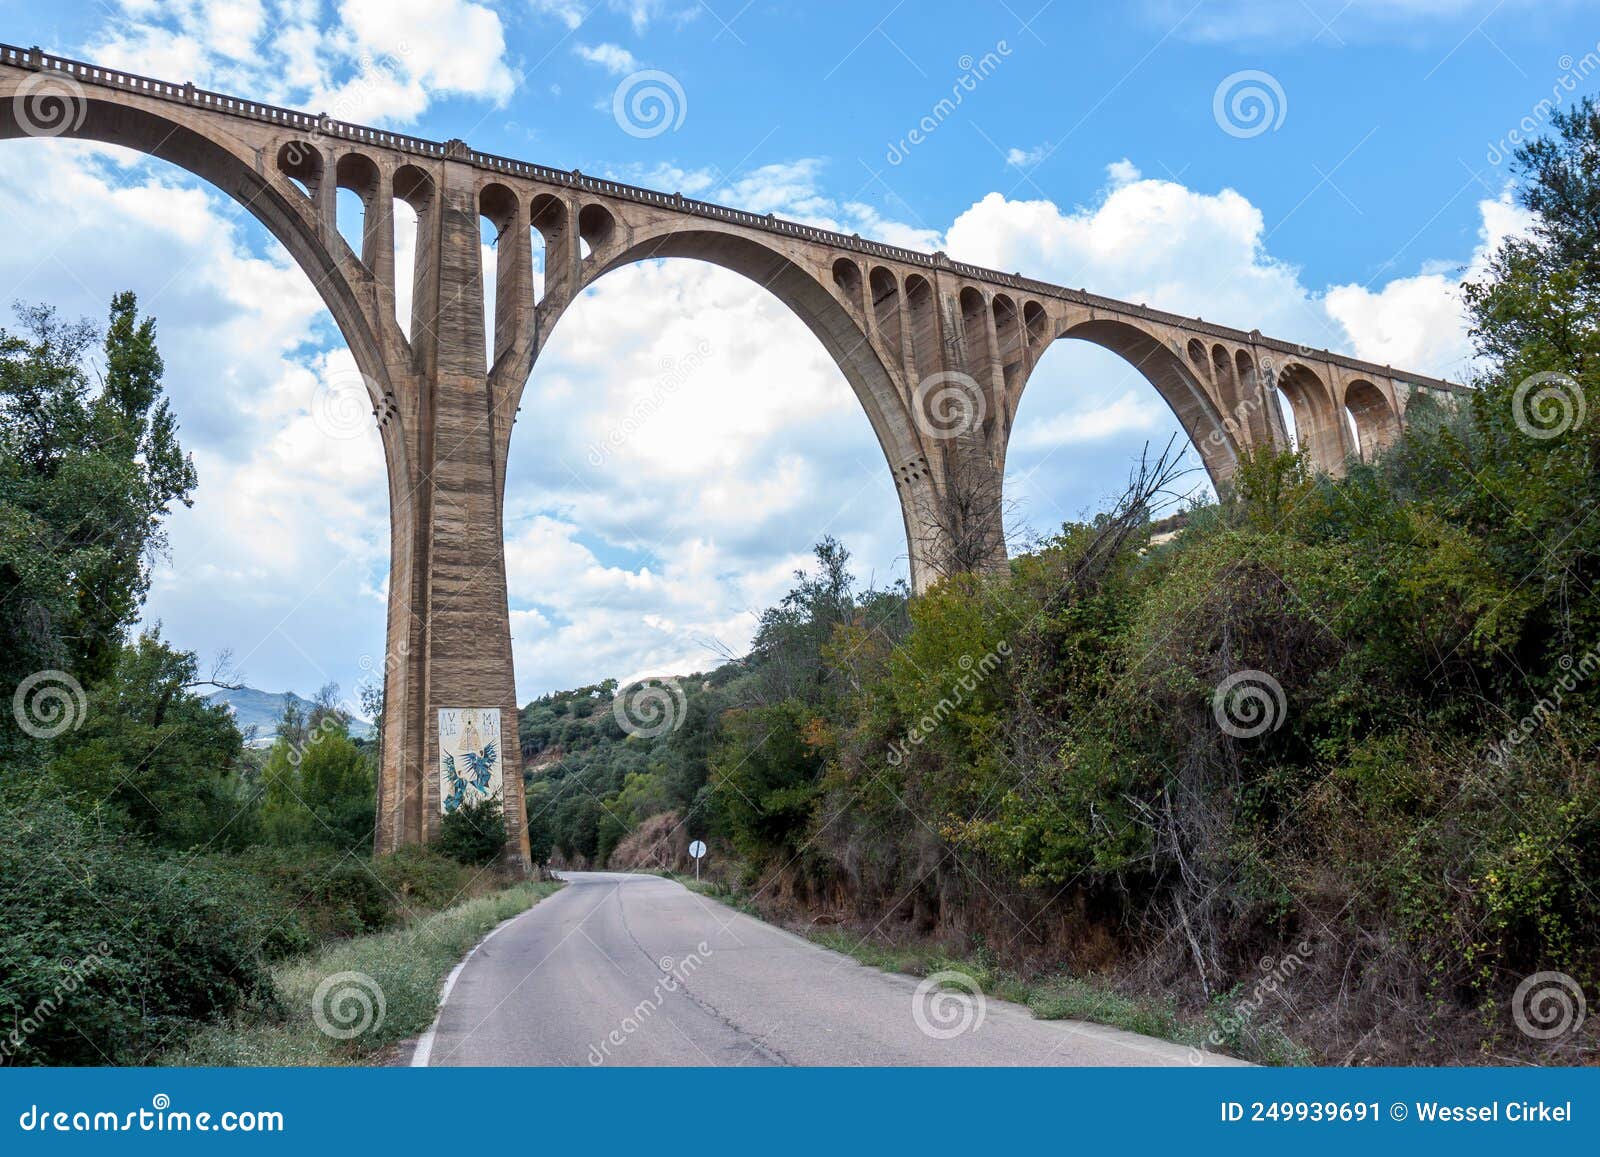 viaducto de guadalupe, spain